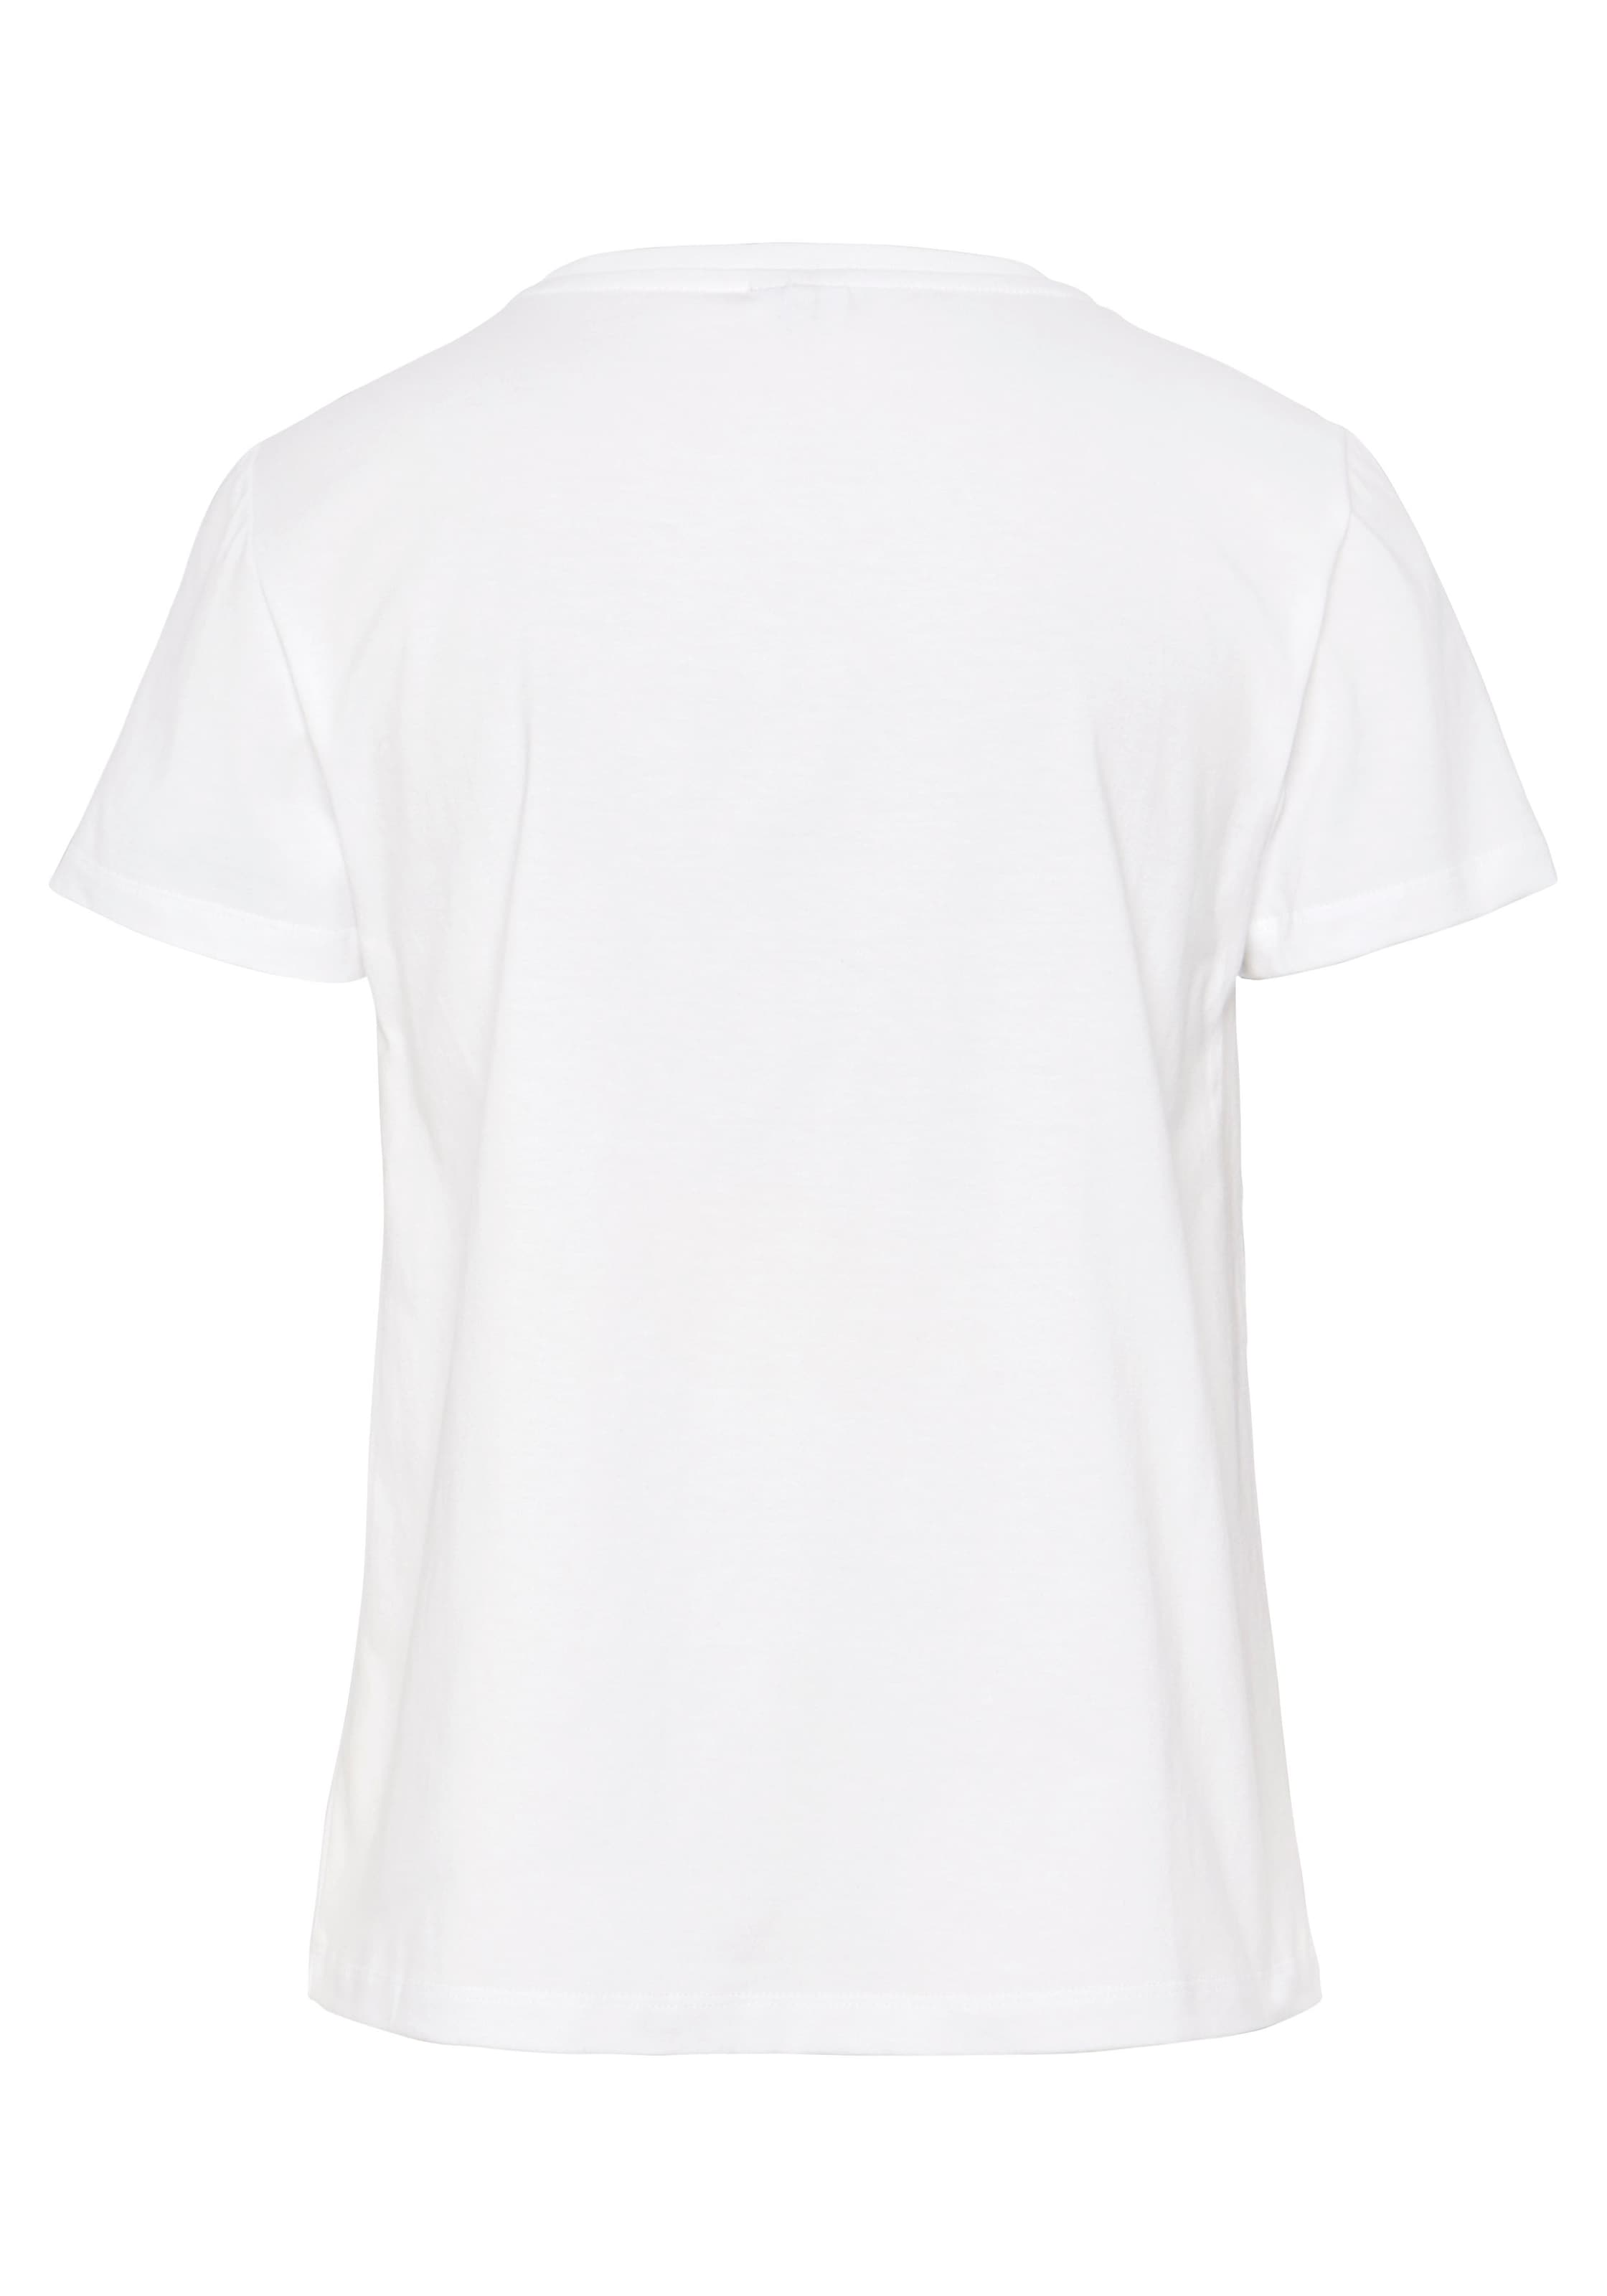 LASCANA T-Shirt, mit Baumwolle, Kurzarmshirt casual-chic ♕ Print, aus bei